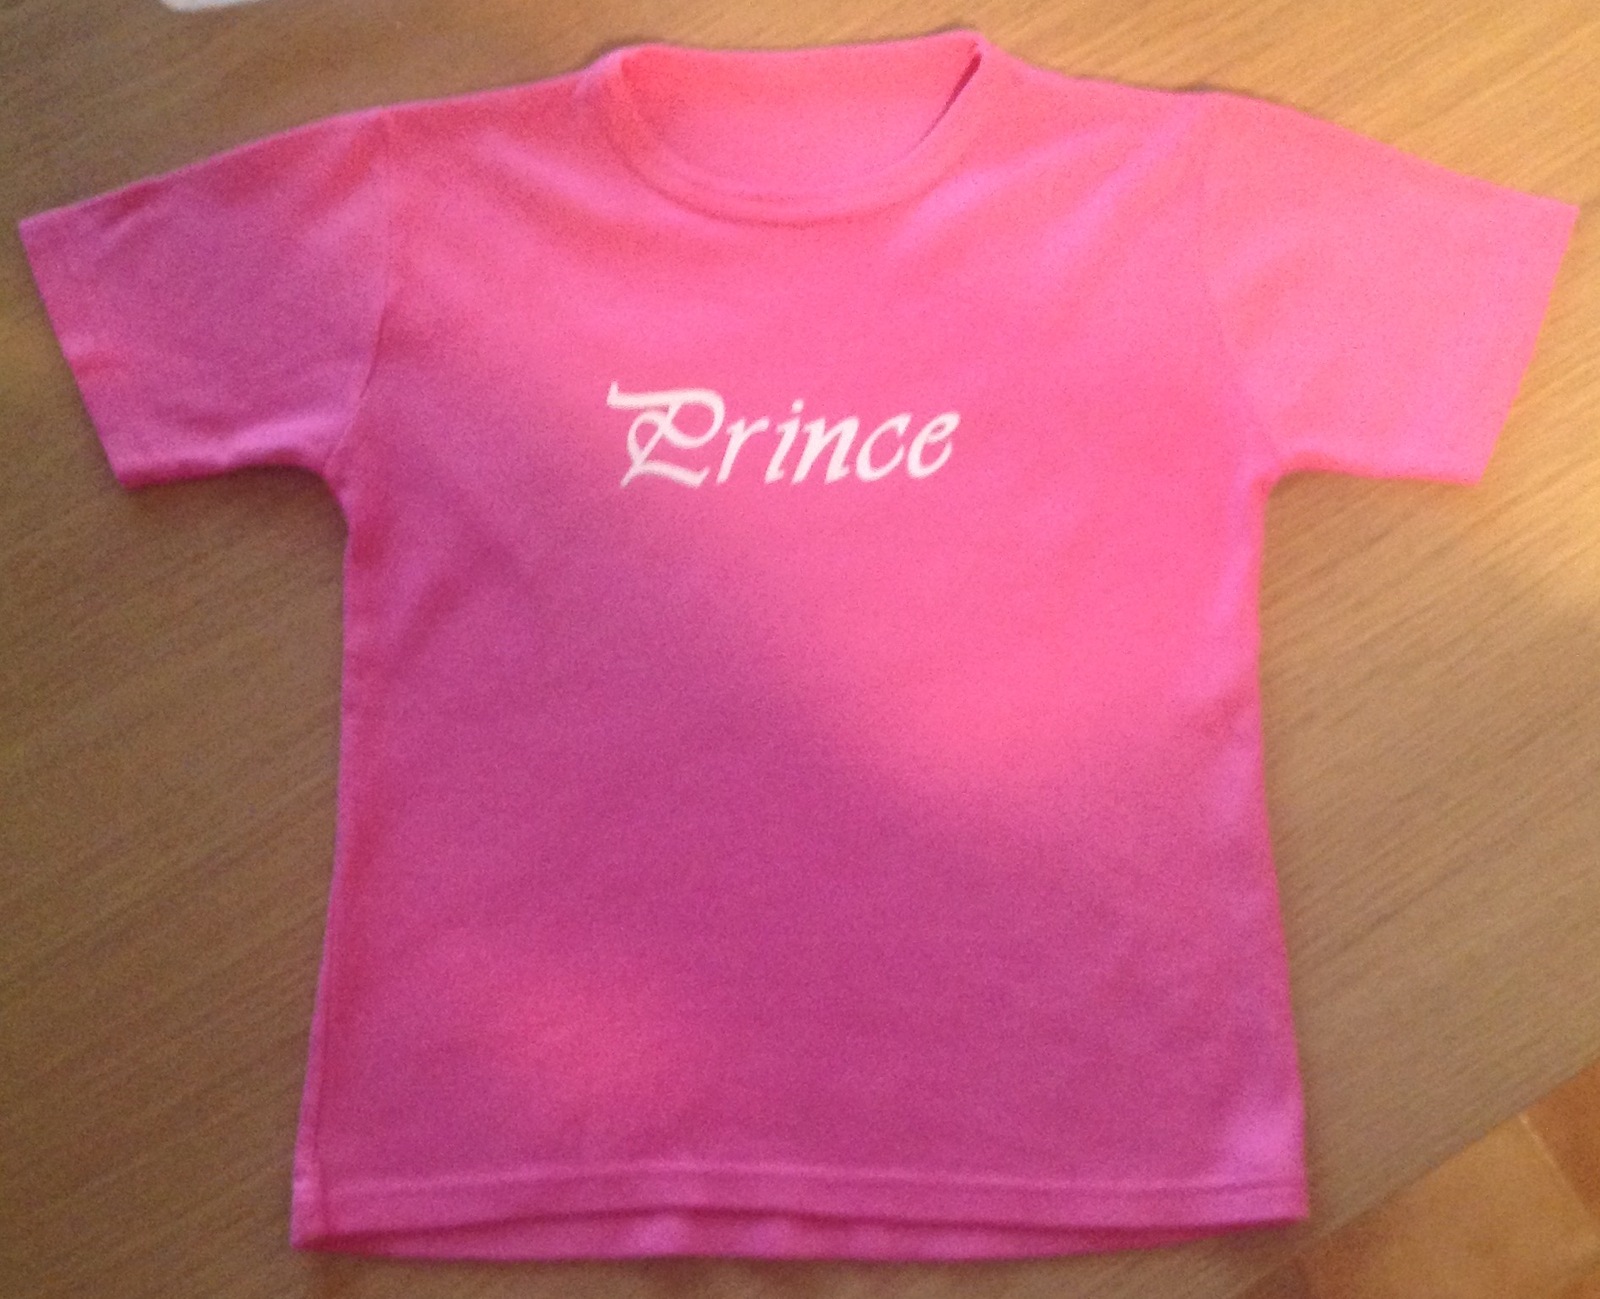 Prince Official T-Shirt NPG Music Club NPGMC Woman's Small - $40.00